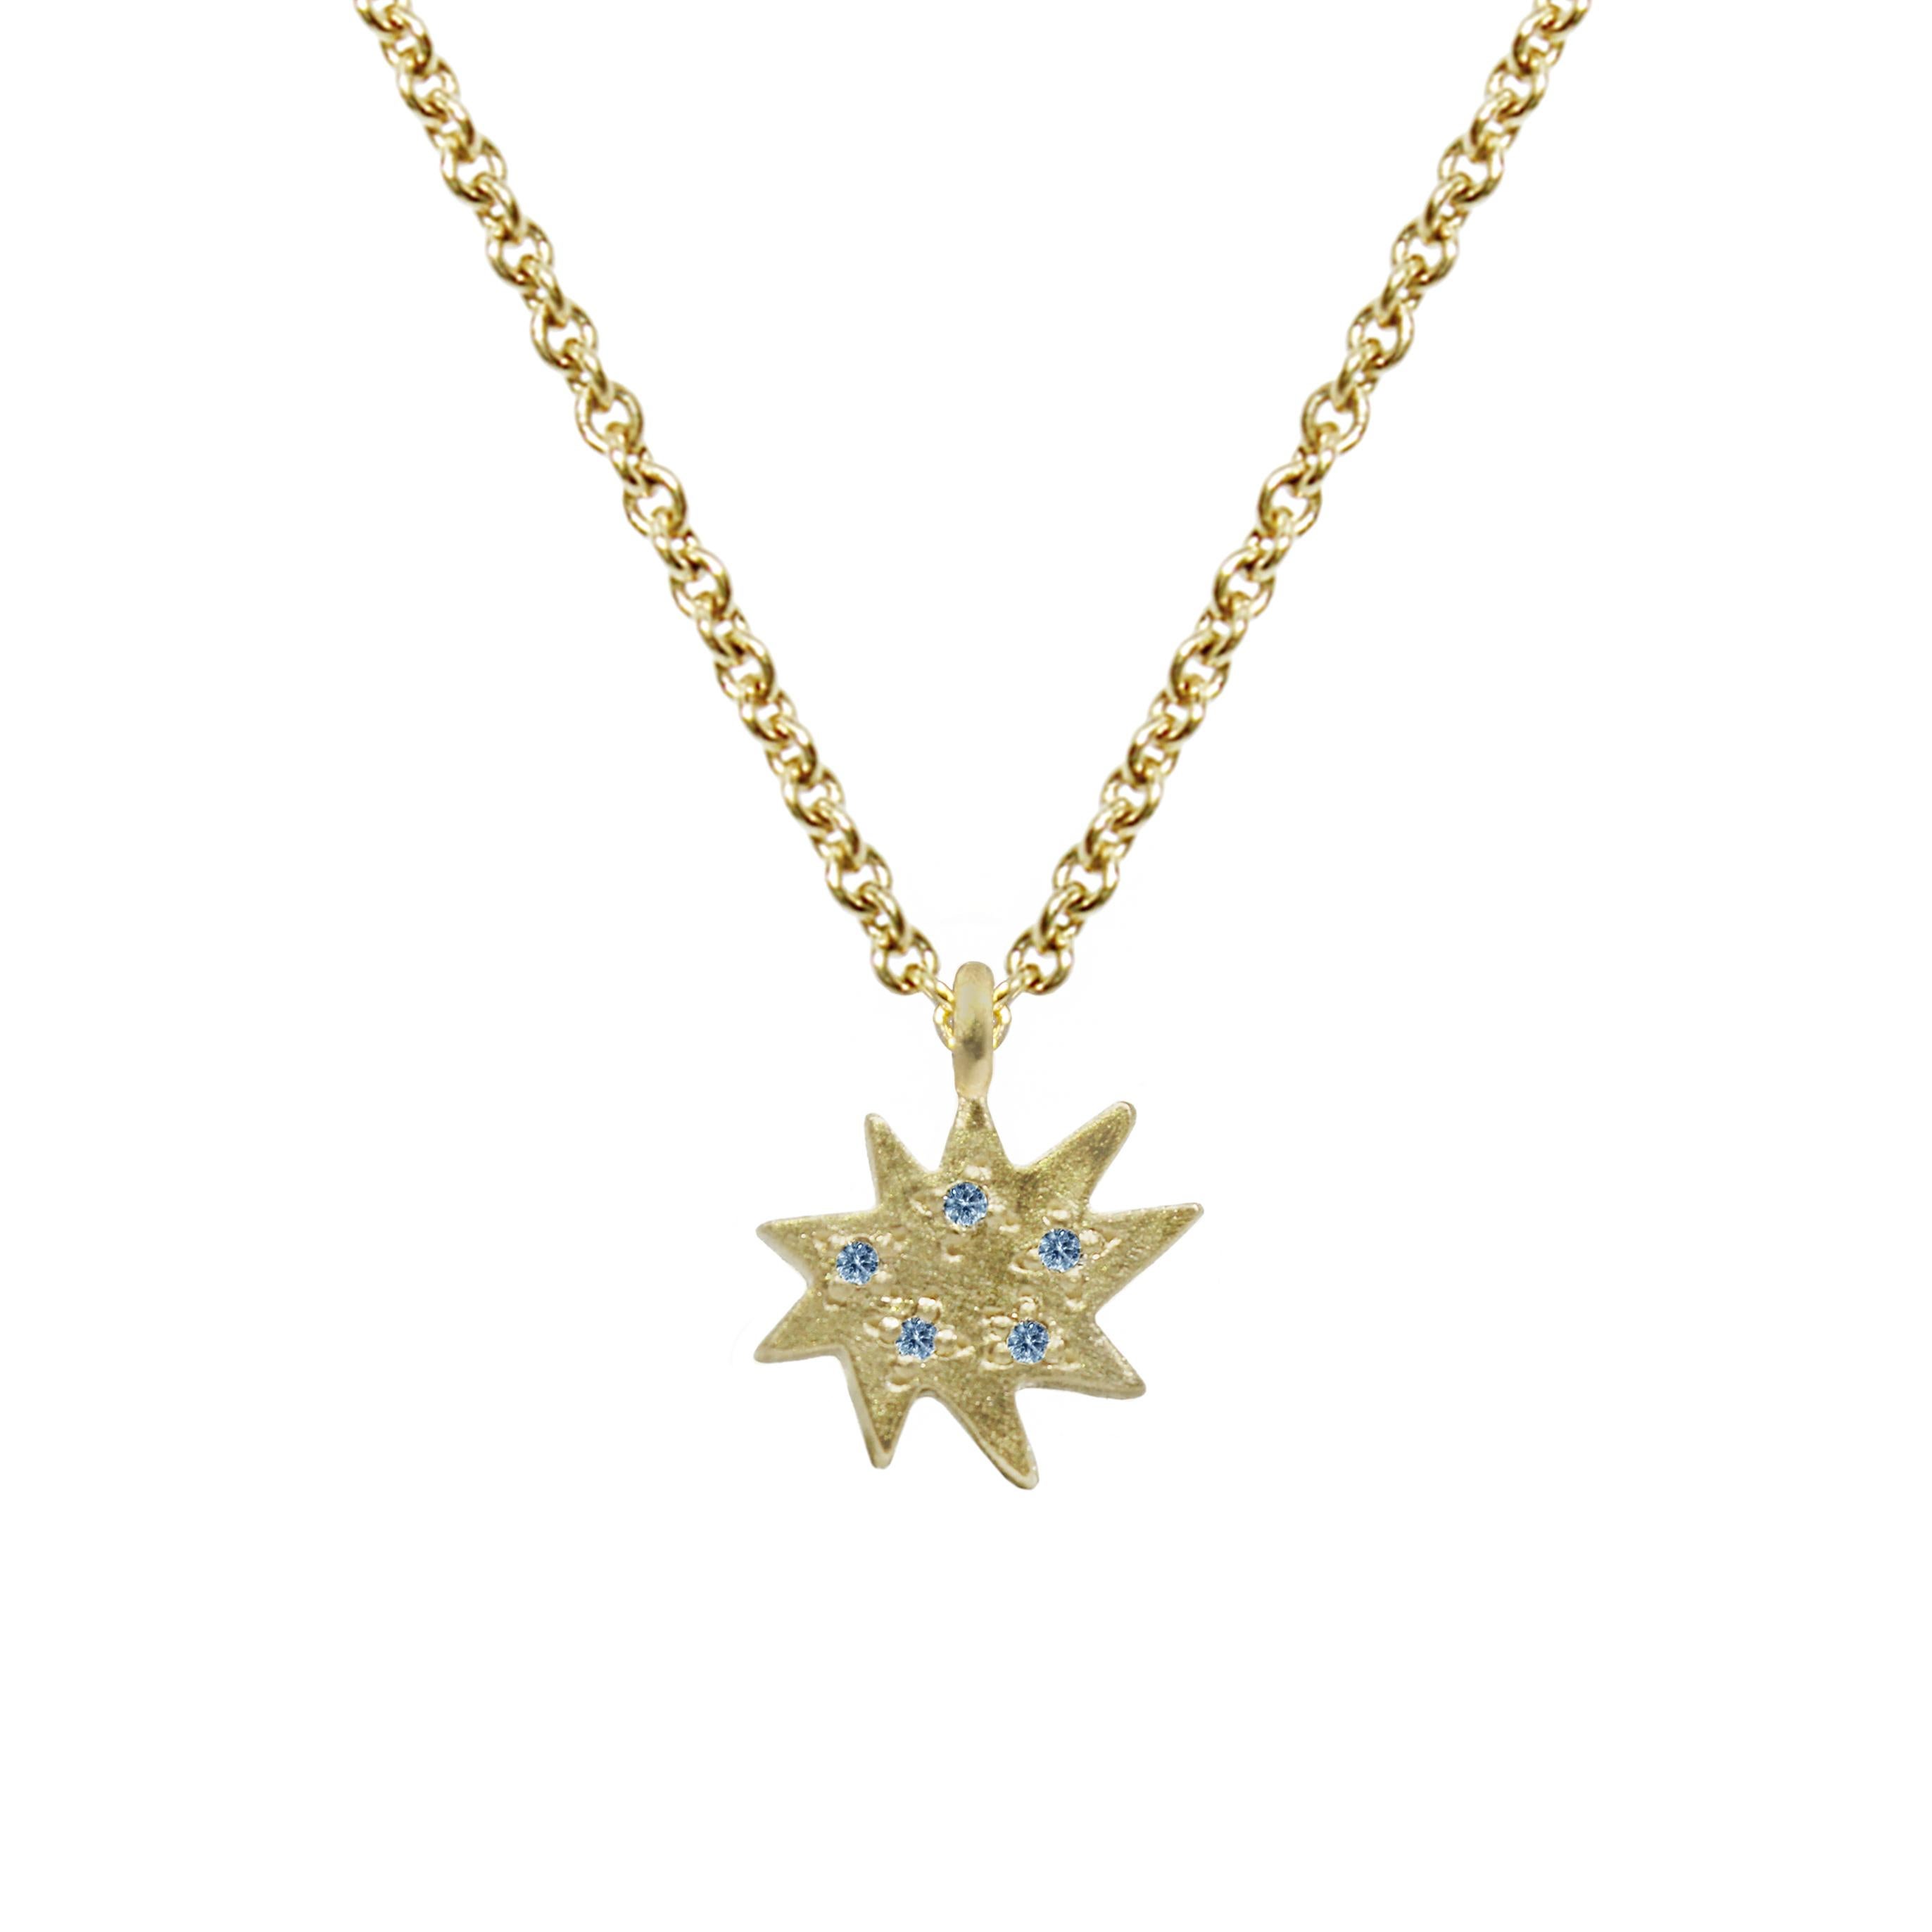 Emily Kuvin Mini Stella Gold, Blue Topaz Organic Star Necklace, Alone or Layered